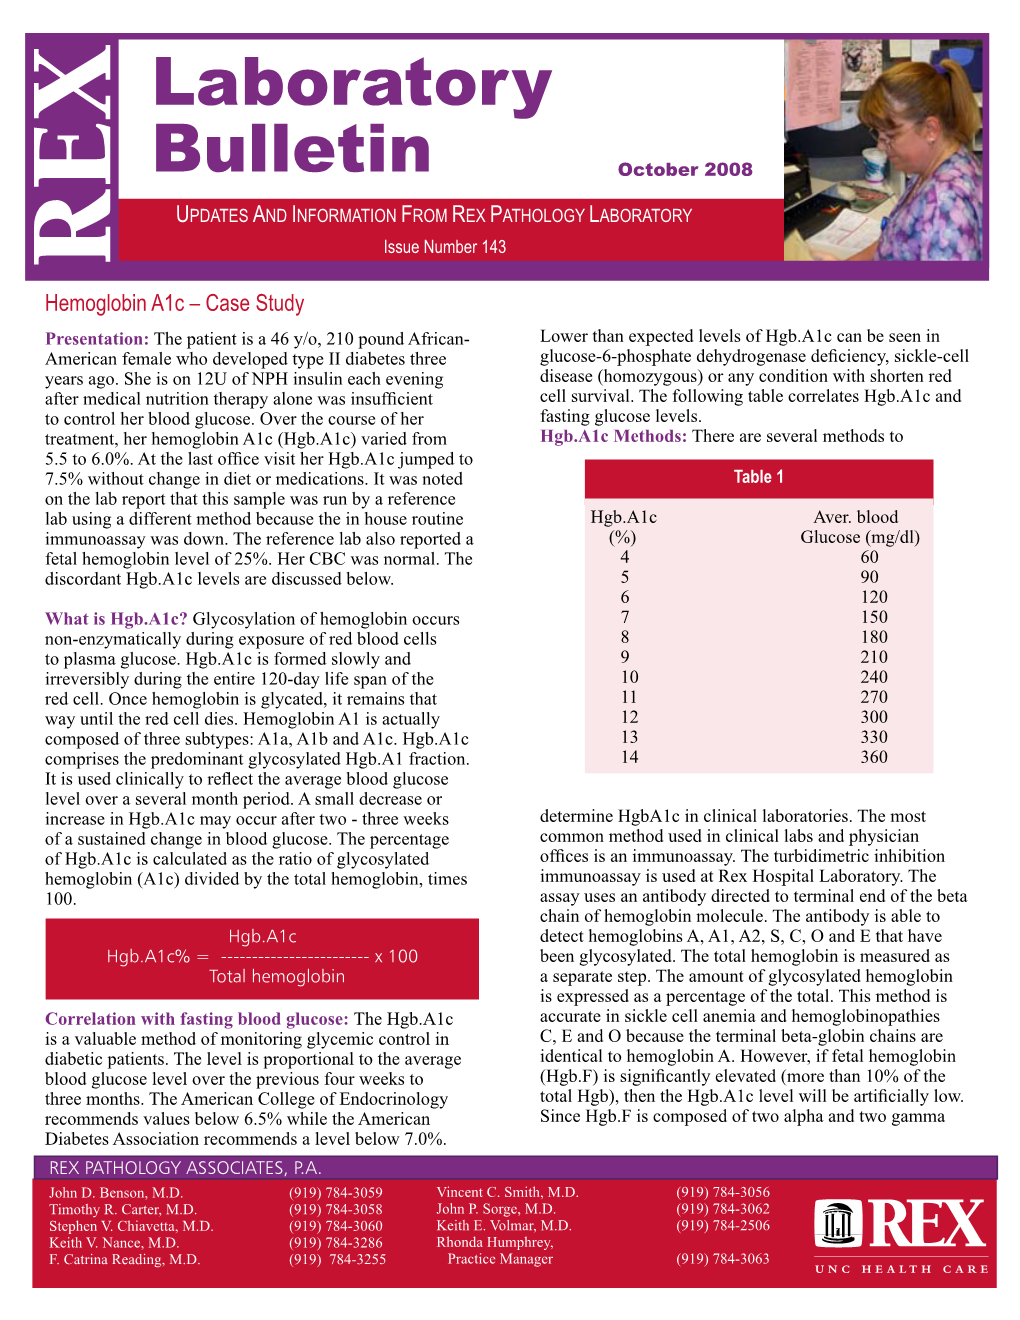 Laboratory Bulletin